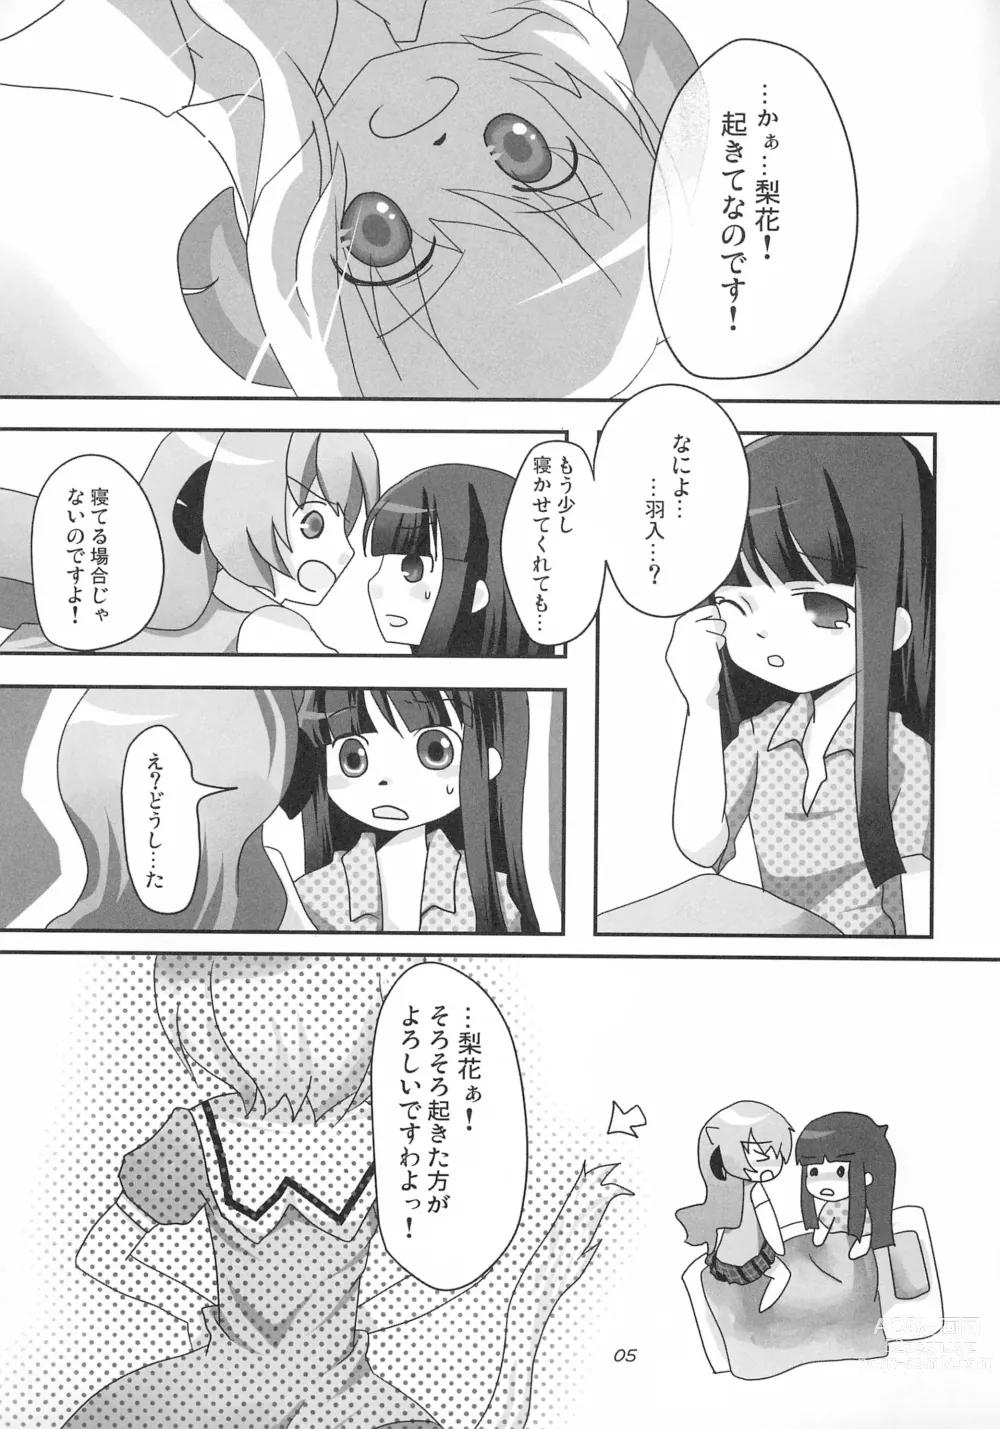 Page 7 of doujinshi Neco Days